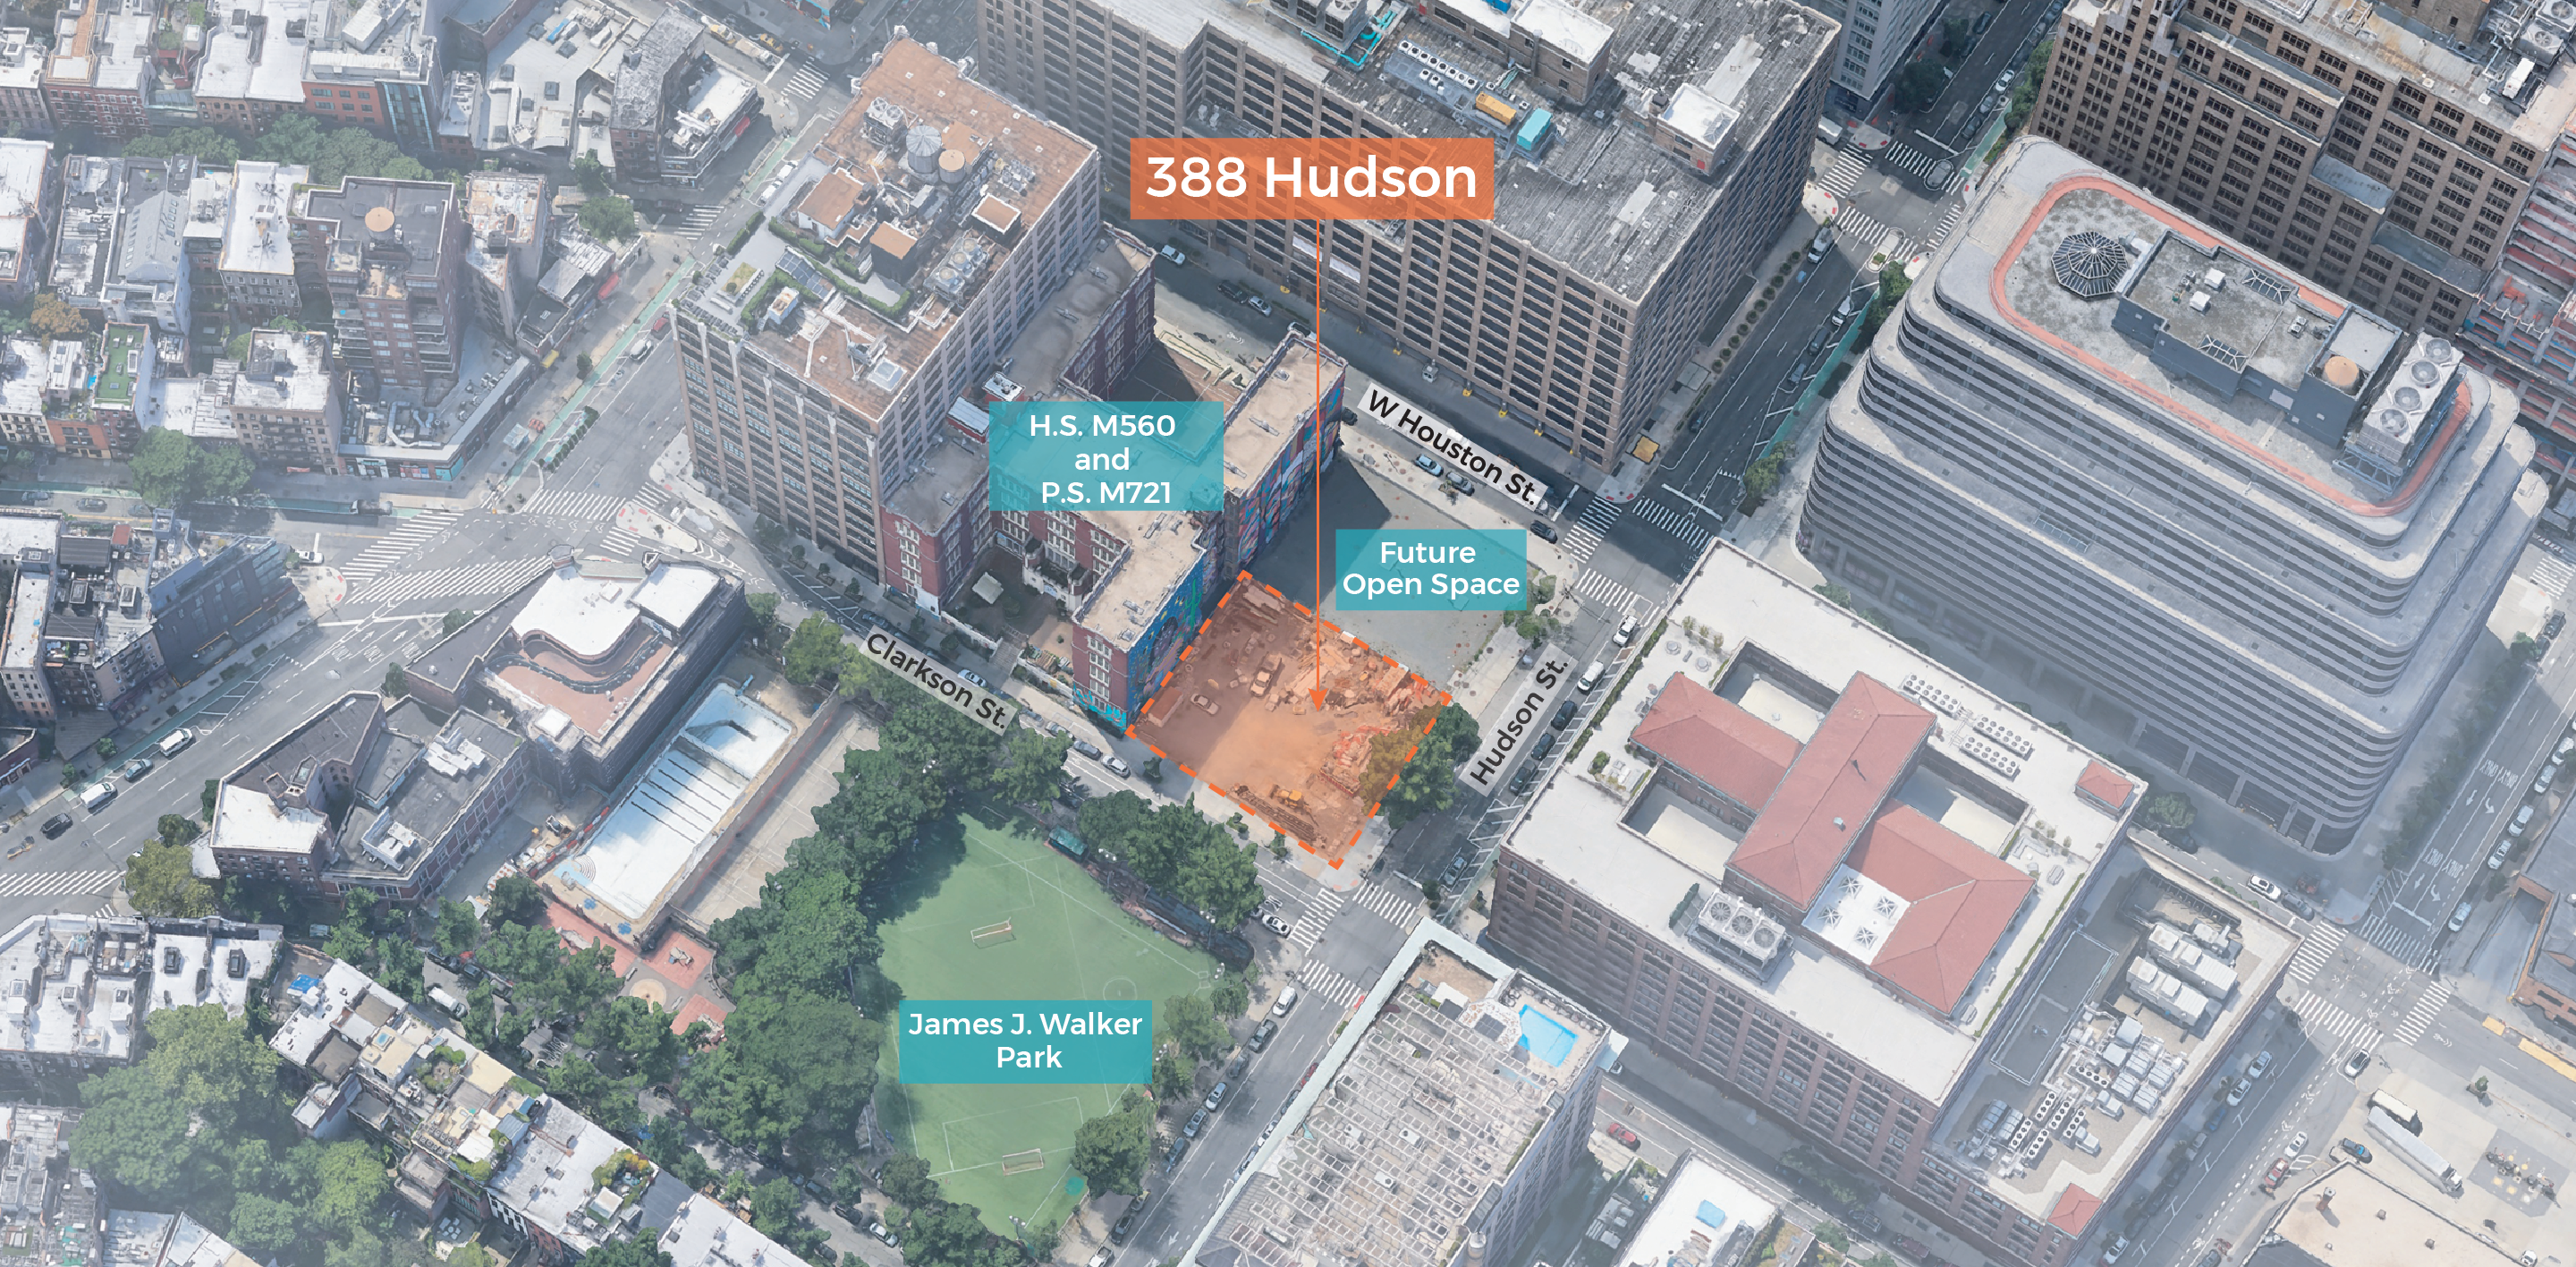 Map of 388 Hudson Street site